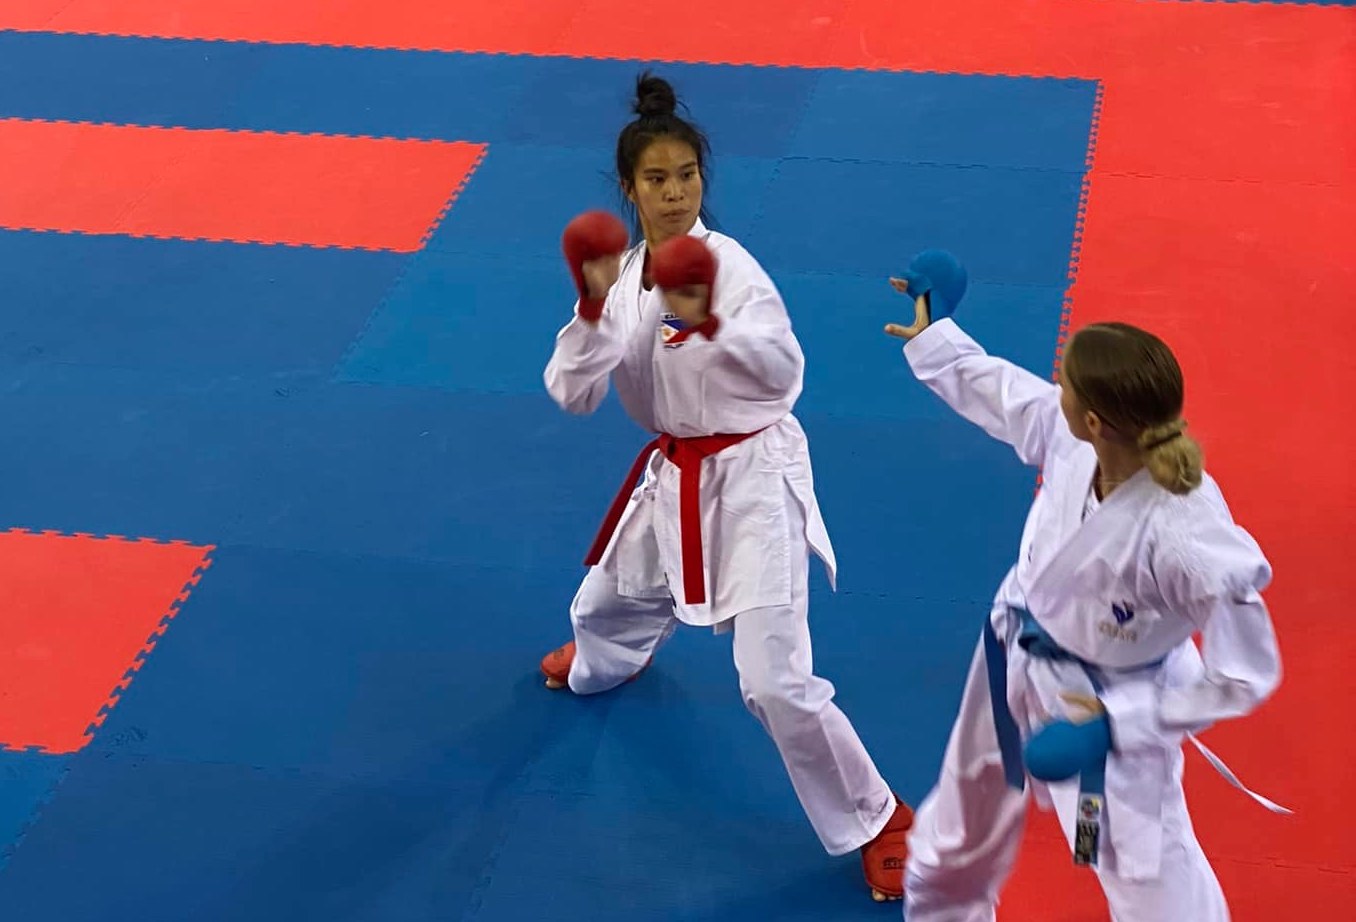 Jamie Lim during her second round match in the World Karate Federation Senior World Championships.